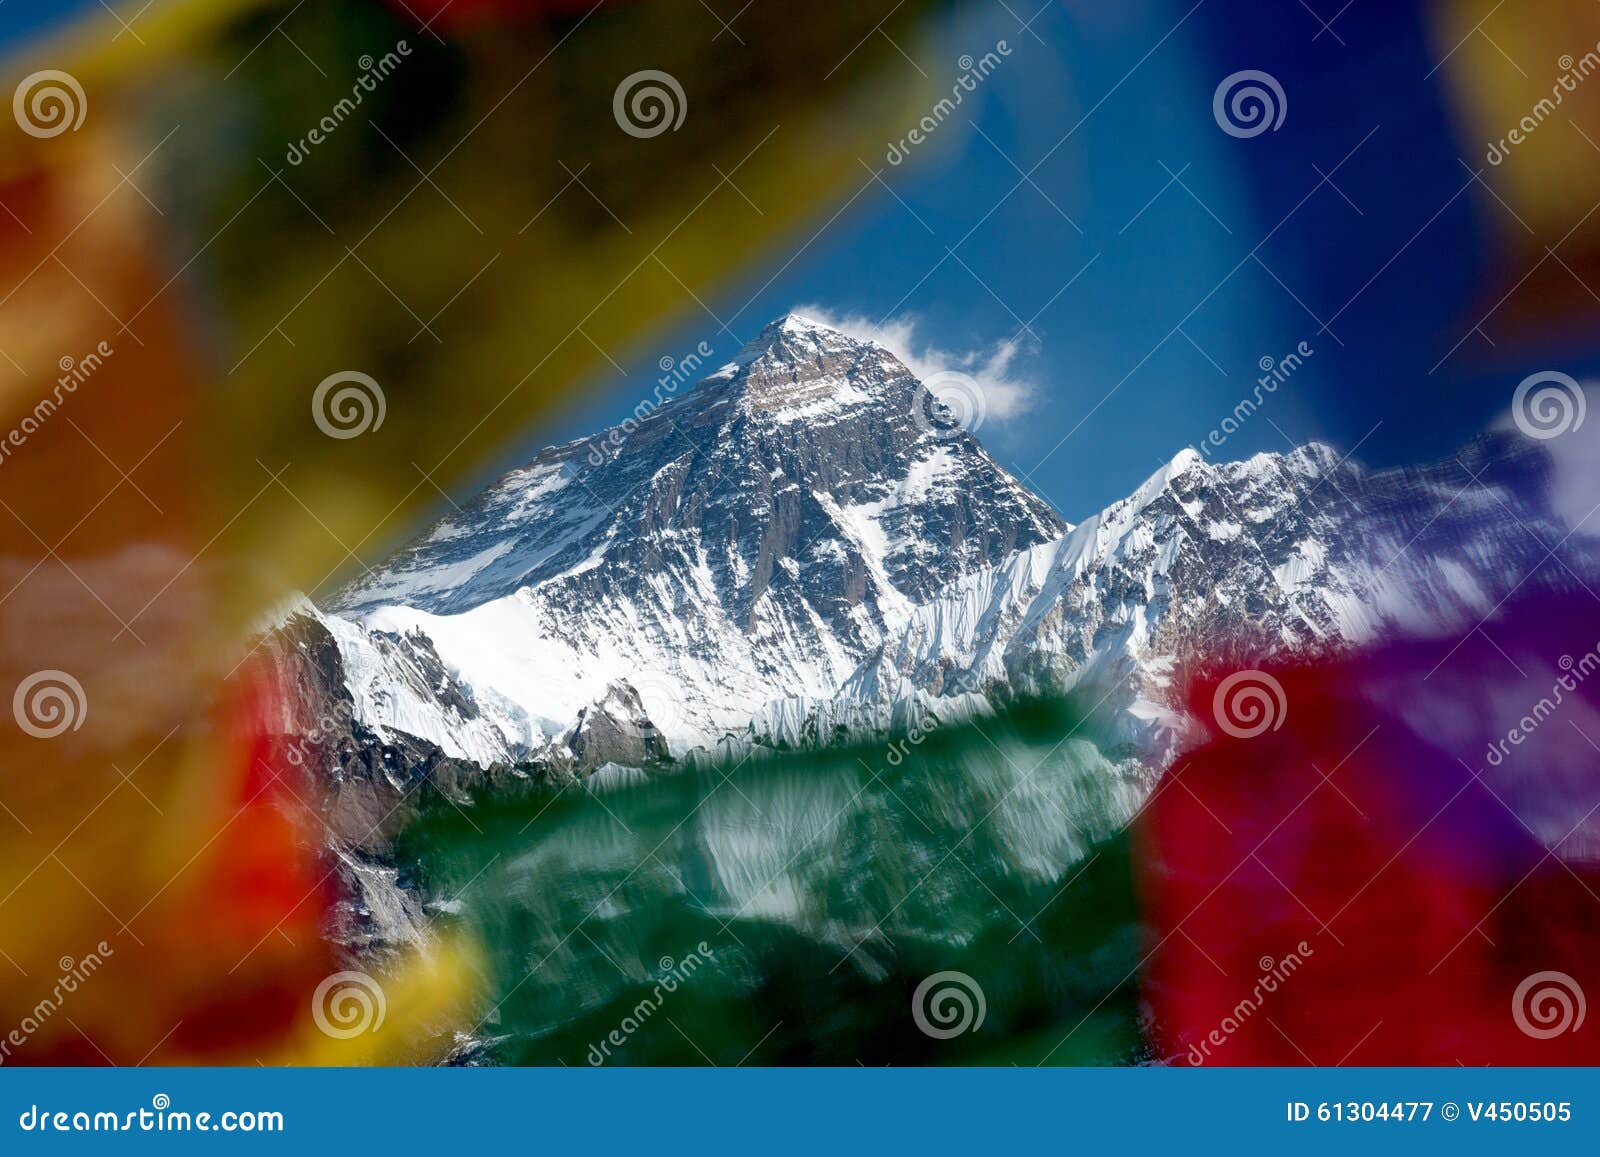 summit of mt. everest from gokyo ri, sulu khumbu, nepal